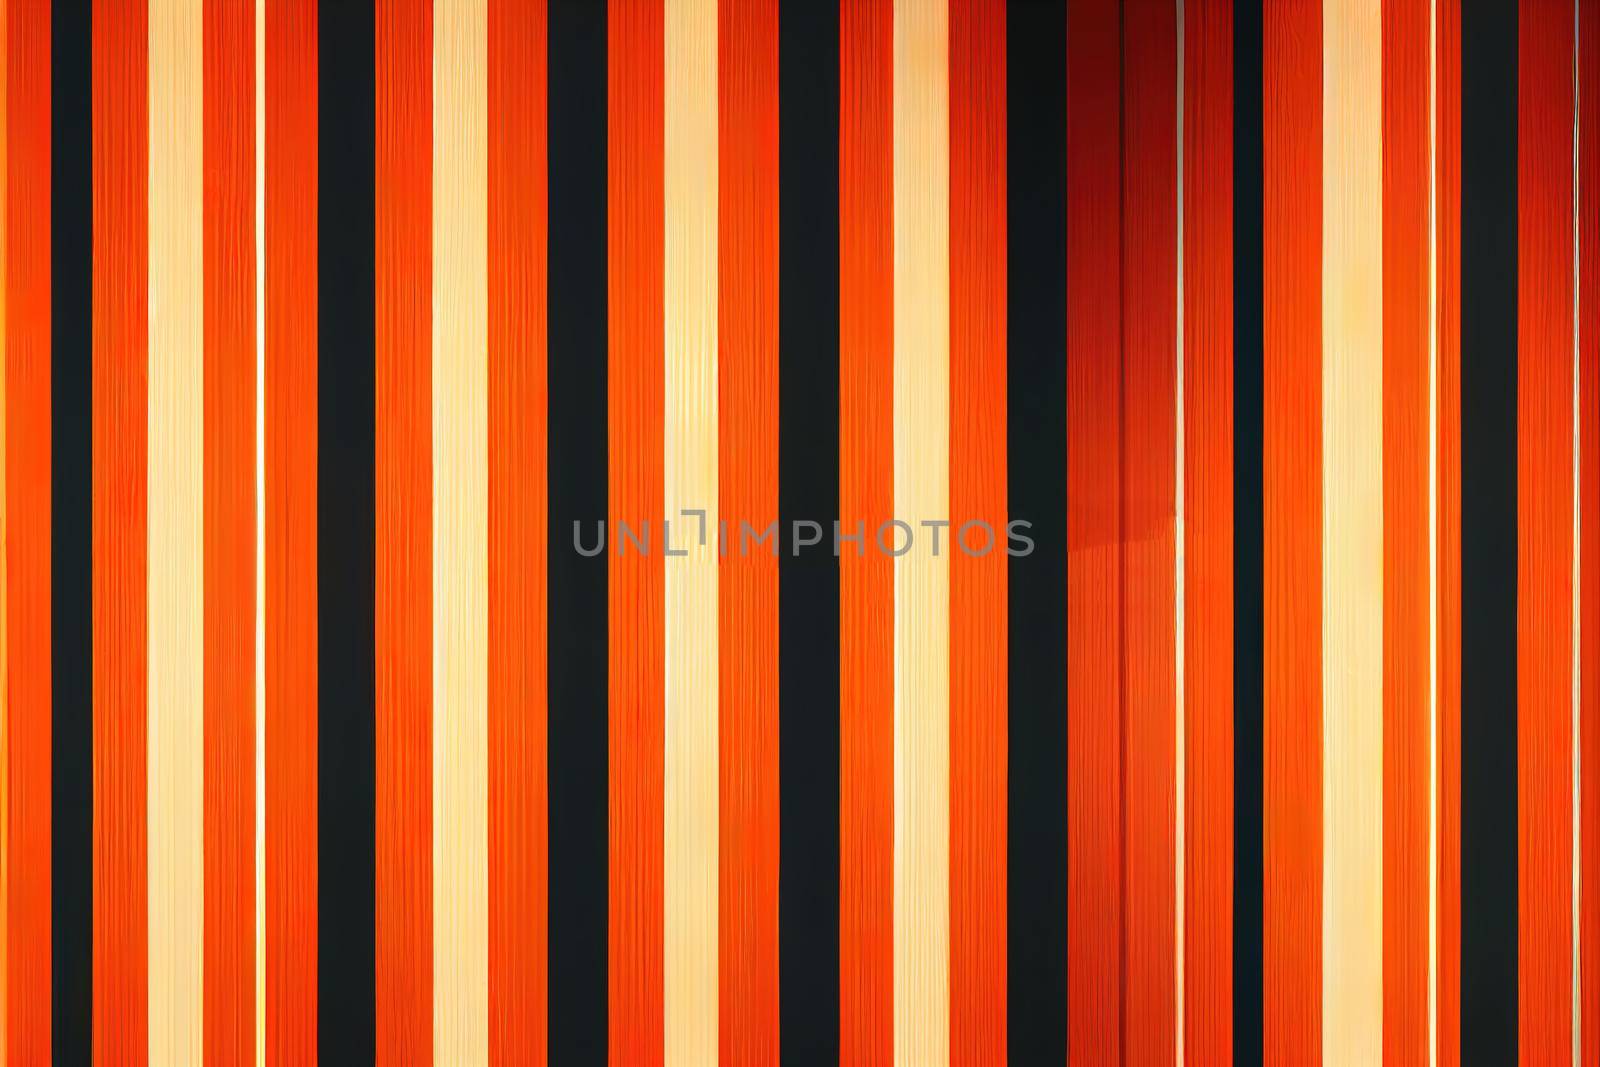 Halloween background striped room in orange and black. illustration.